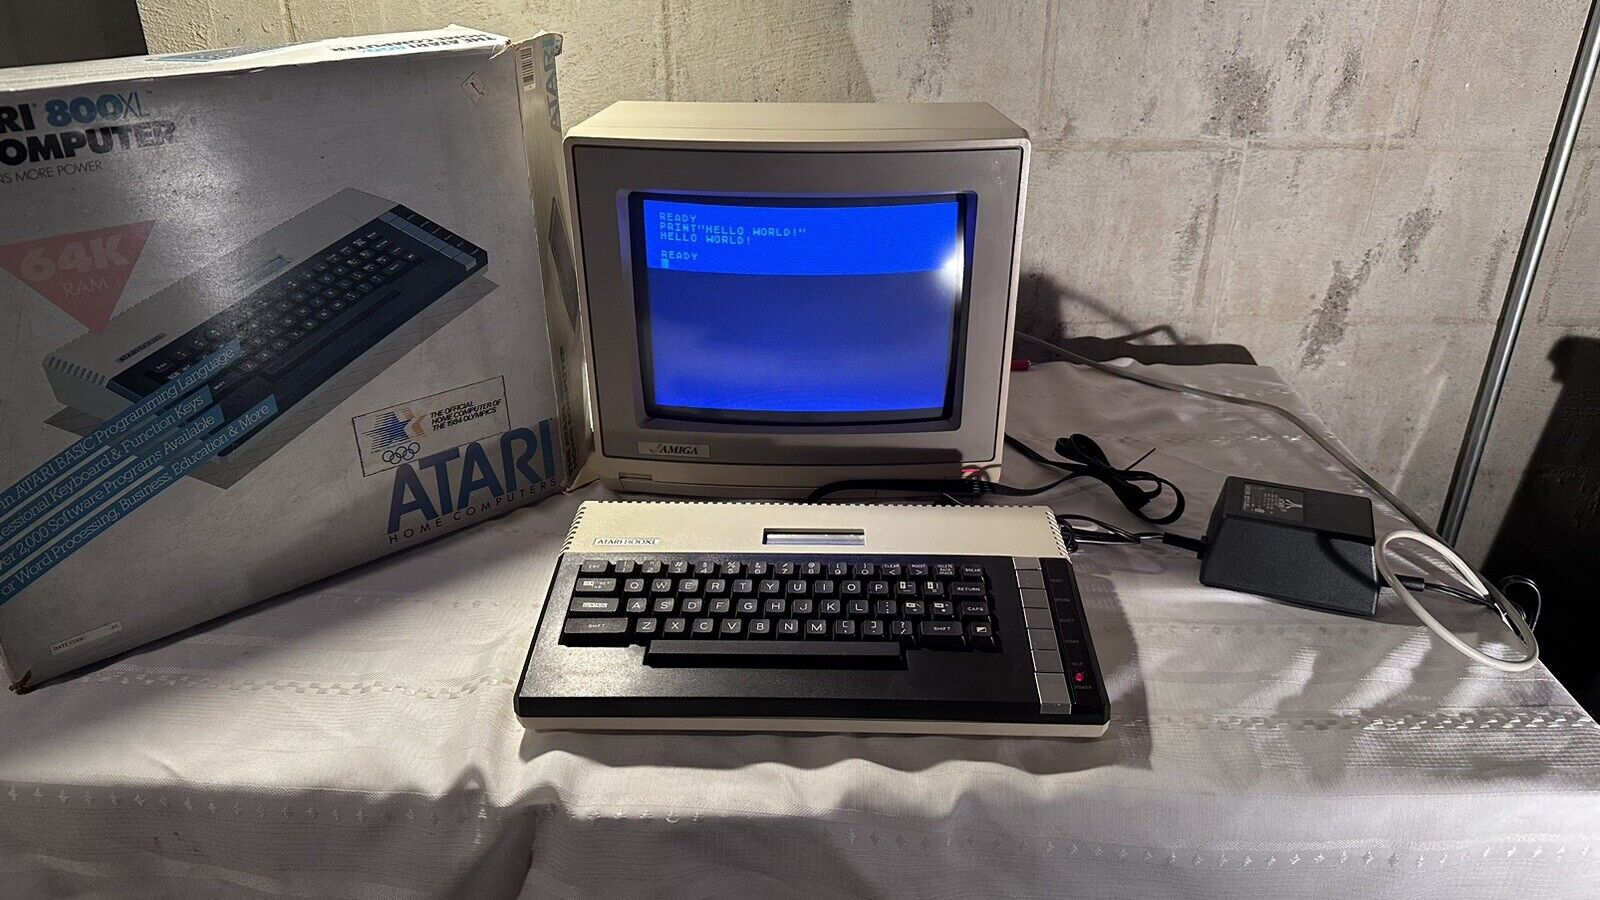 FULLY WORKING Atari 800XL Retro Computer Vintage Computing With Box + Styrofoam